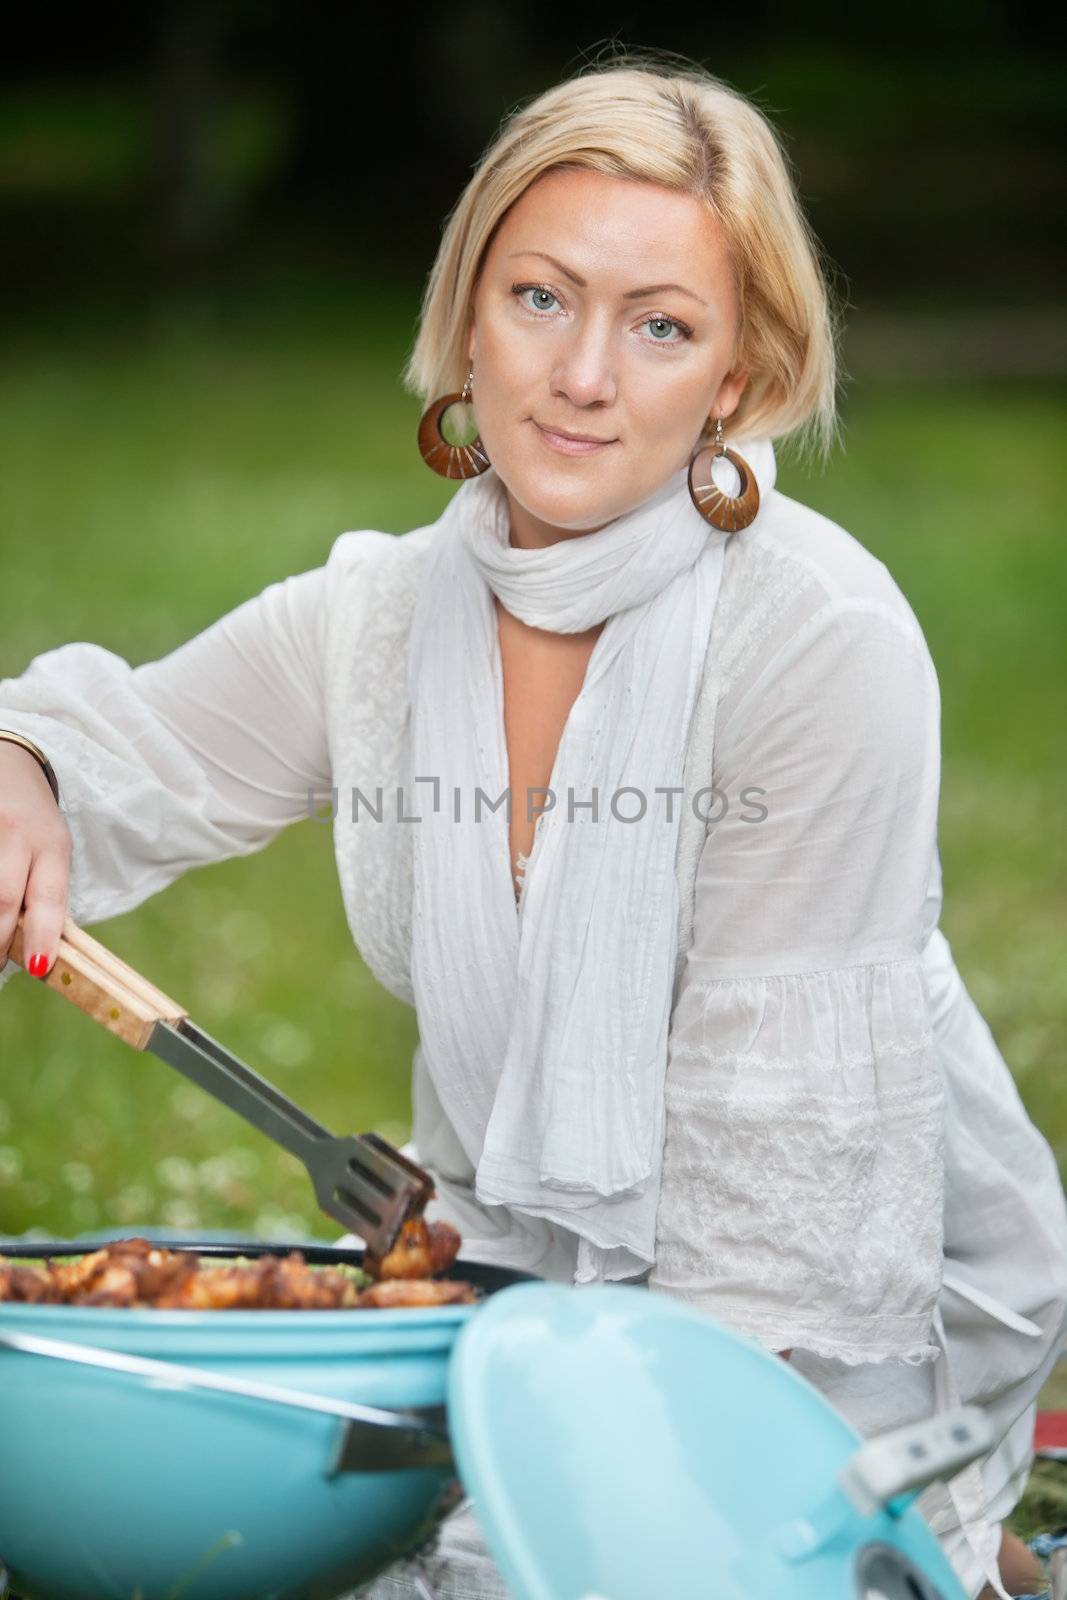 Female Preparing Food On Barbecue by leaf